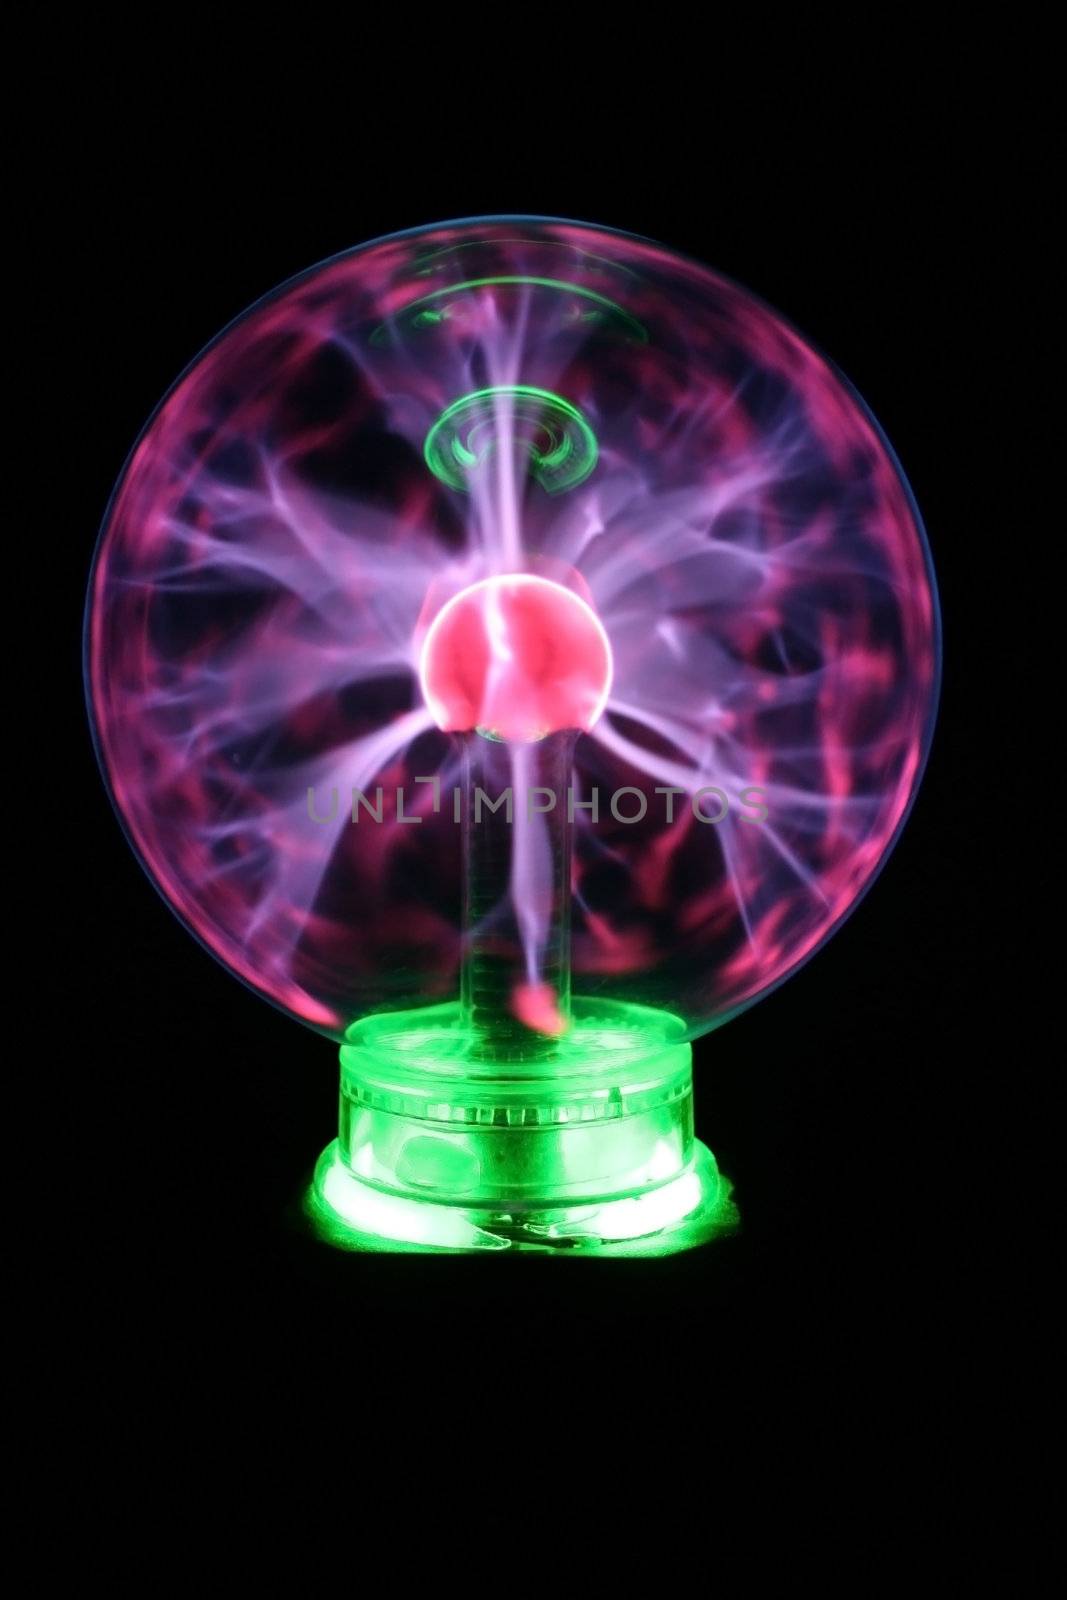 plasma ball with green neon lights
